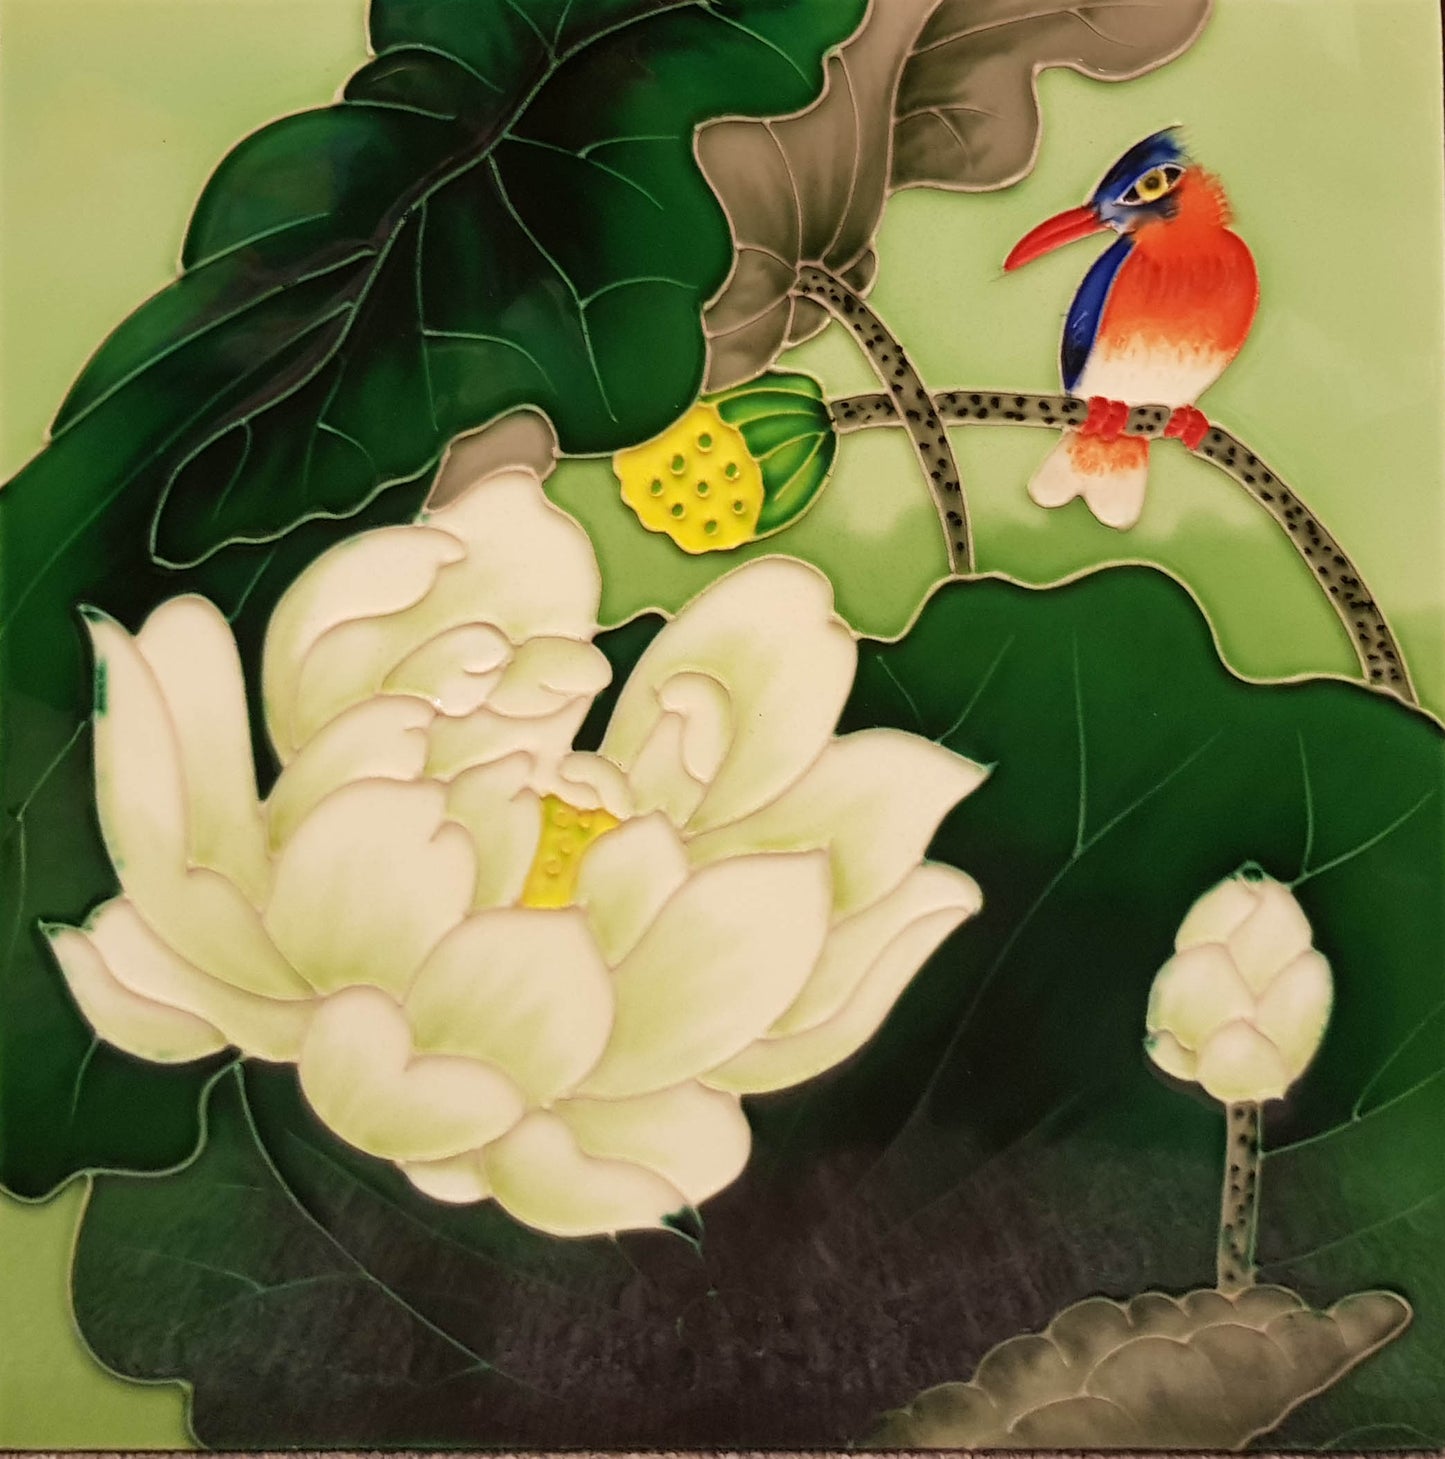 3526 Lotus Flower with Red Bird Green Background 30cm x 30cm Pureland Ceramic Tile